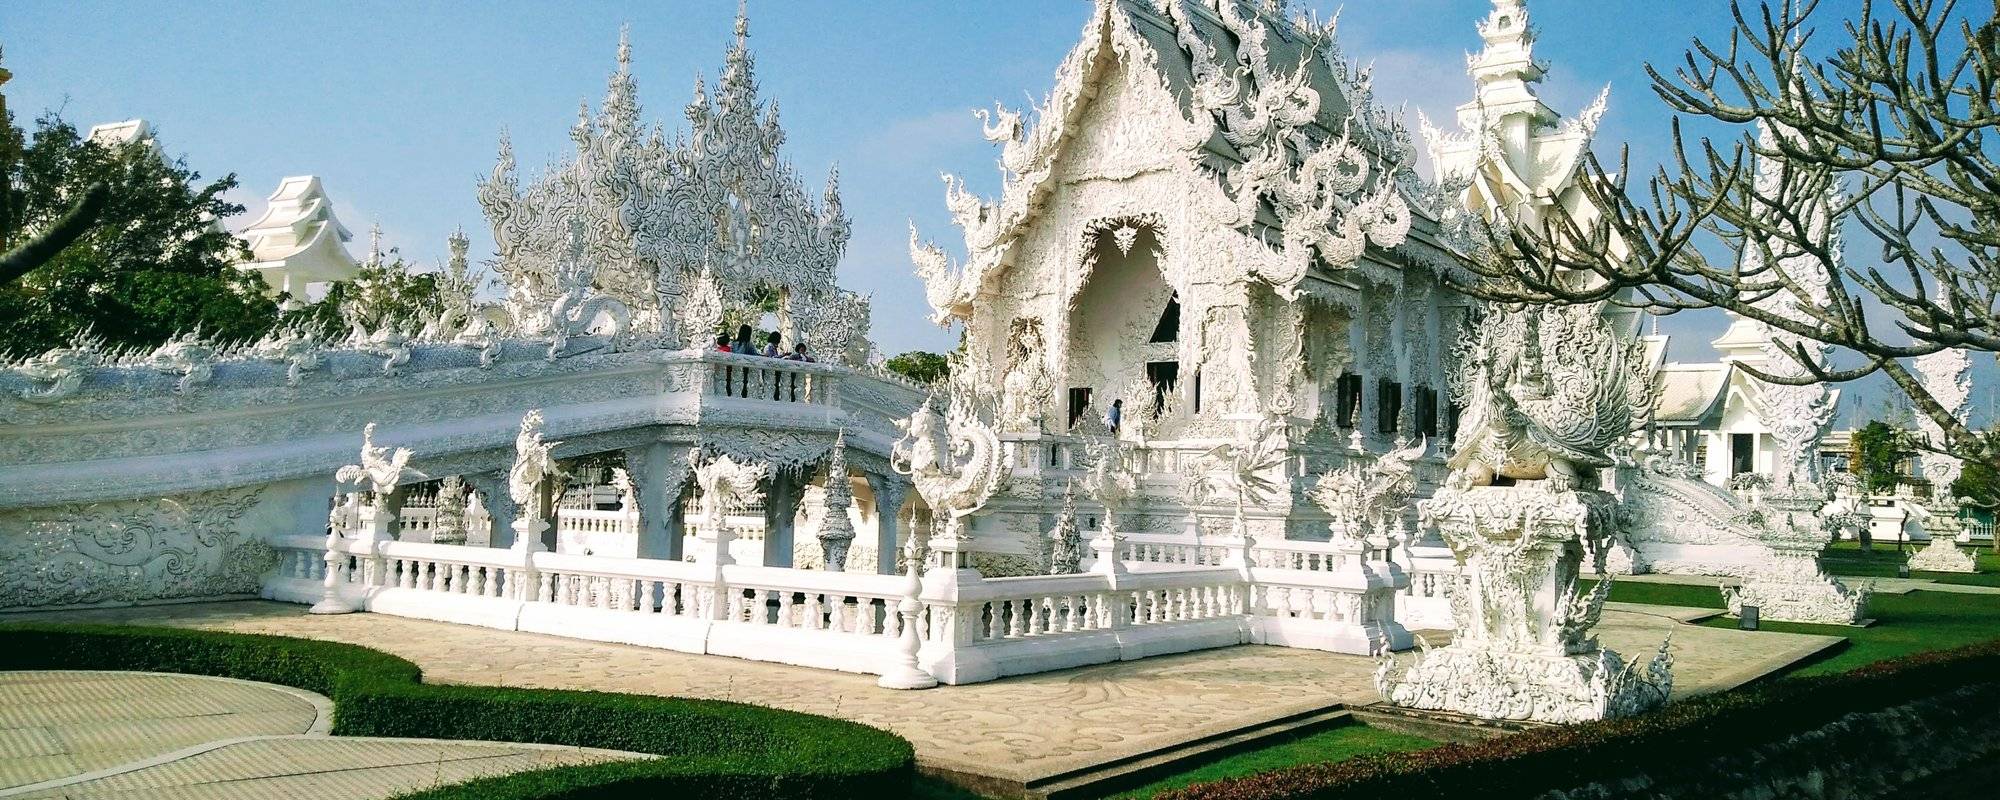 All White: White Temple Chiang Rai (Thailand) vs. Taj Mahal (India)